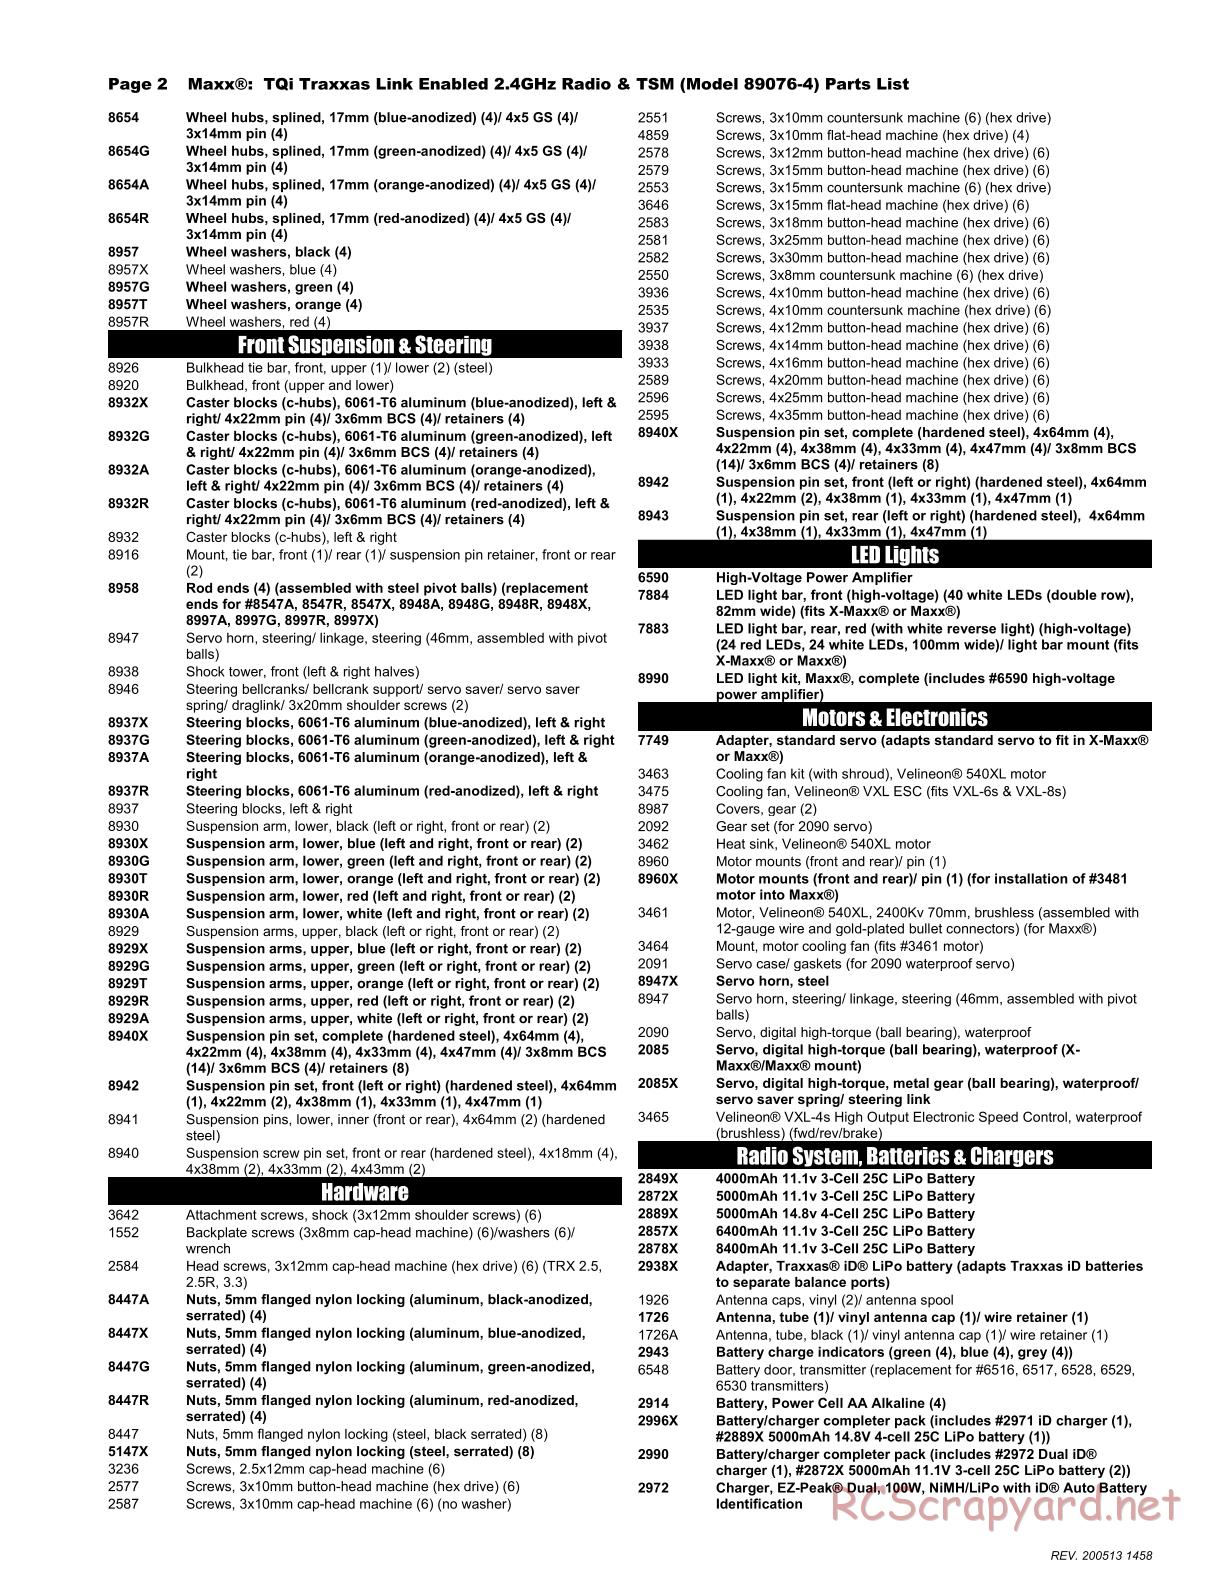 Traxxas - Maxx - Parts List - Page 2